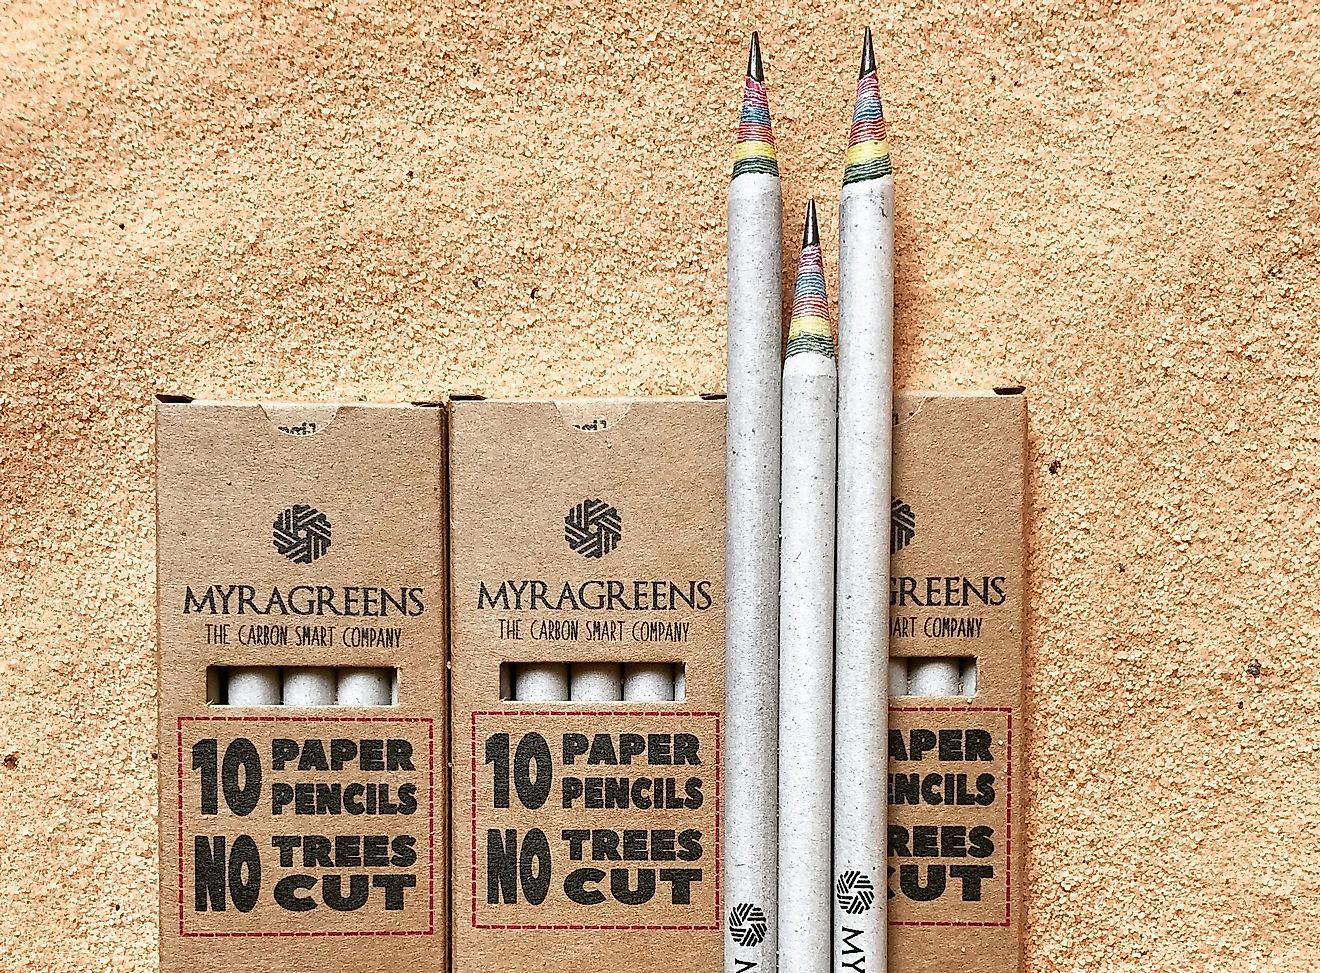 Recycled pencils made by MyraGreens. Photo credit: MyraGreens.